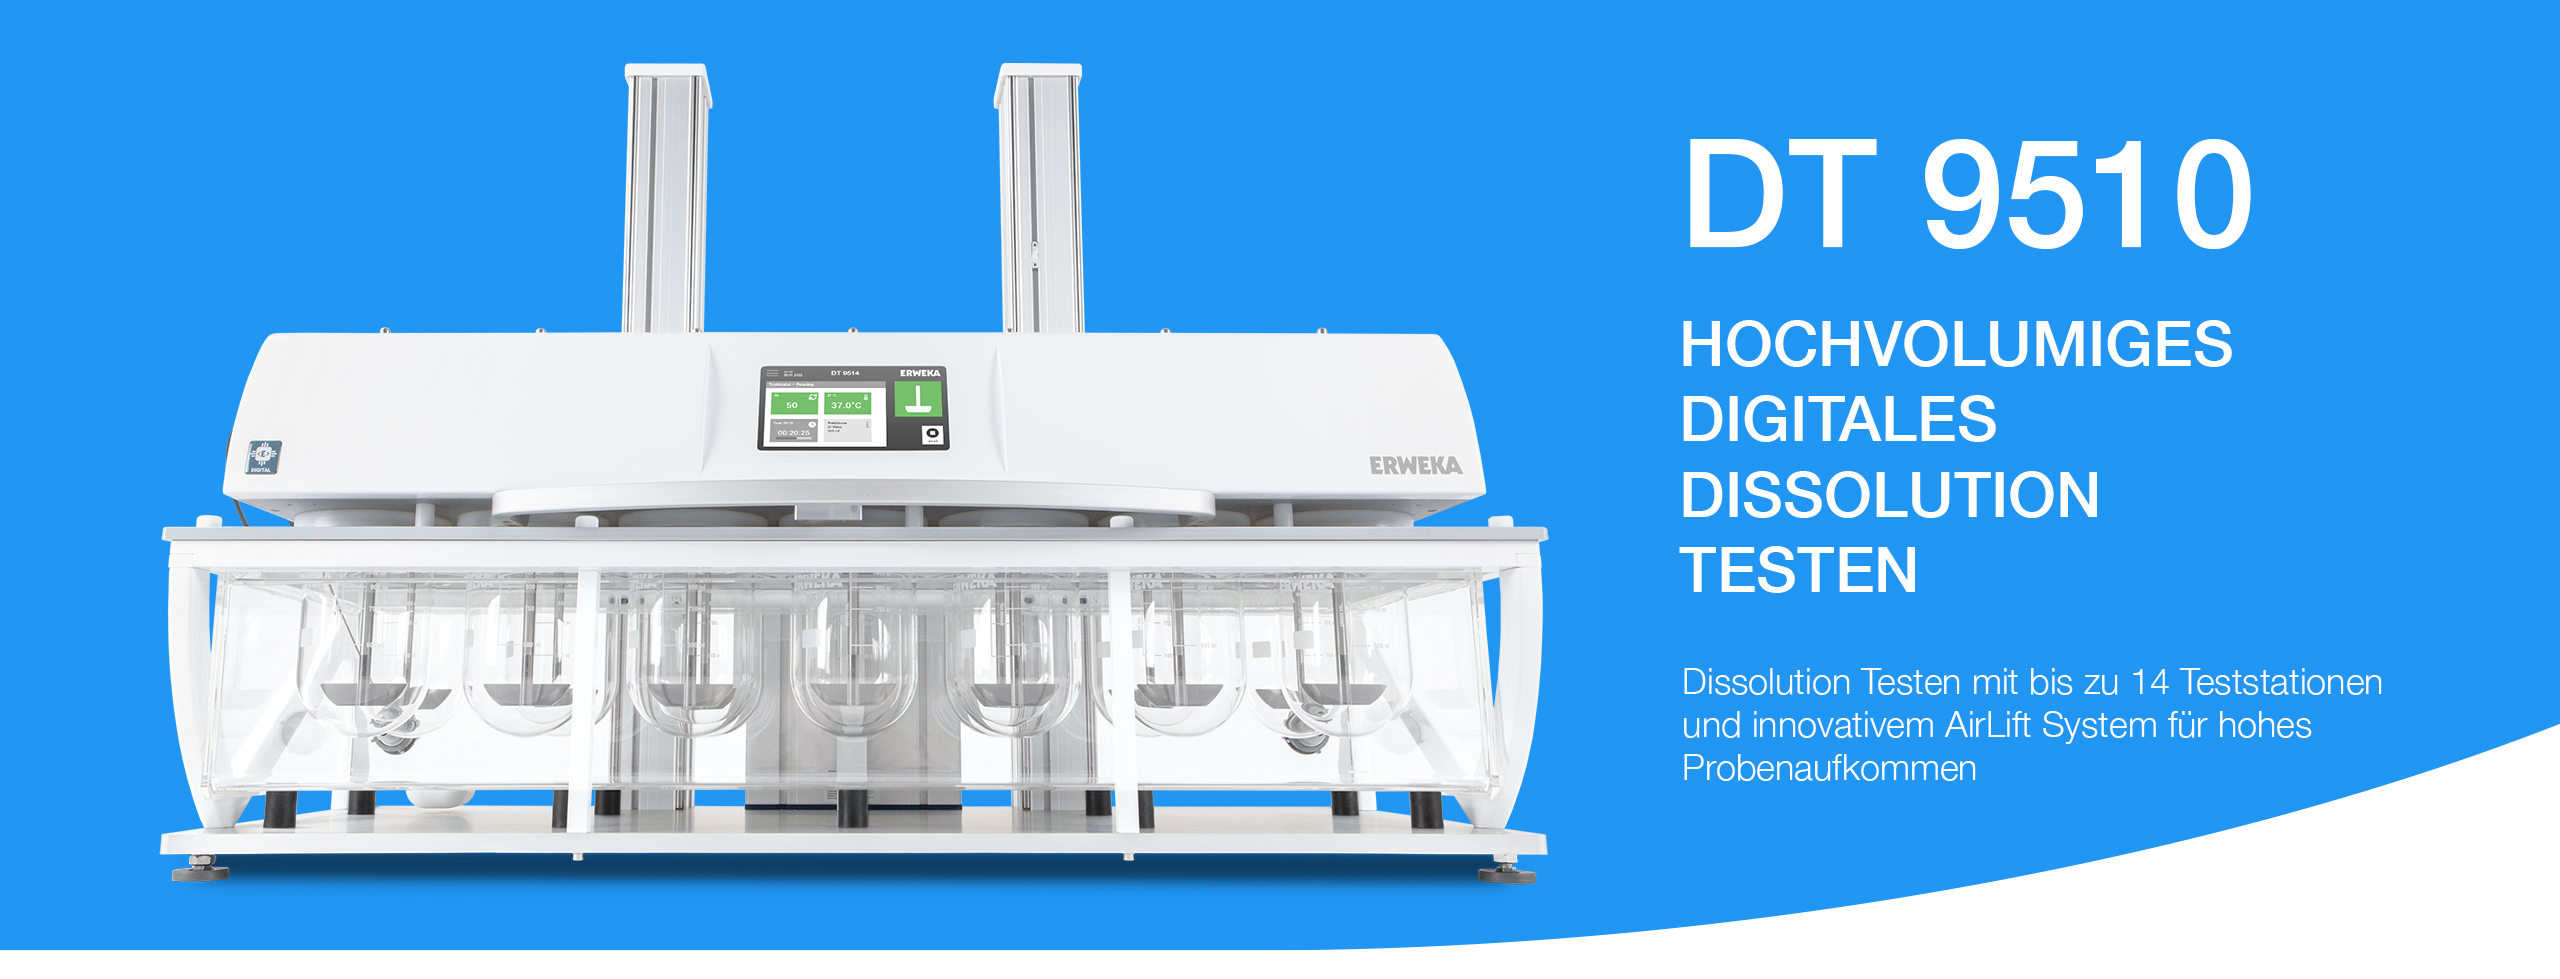 DT 9510 Digitaler Dissolution Tester